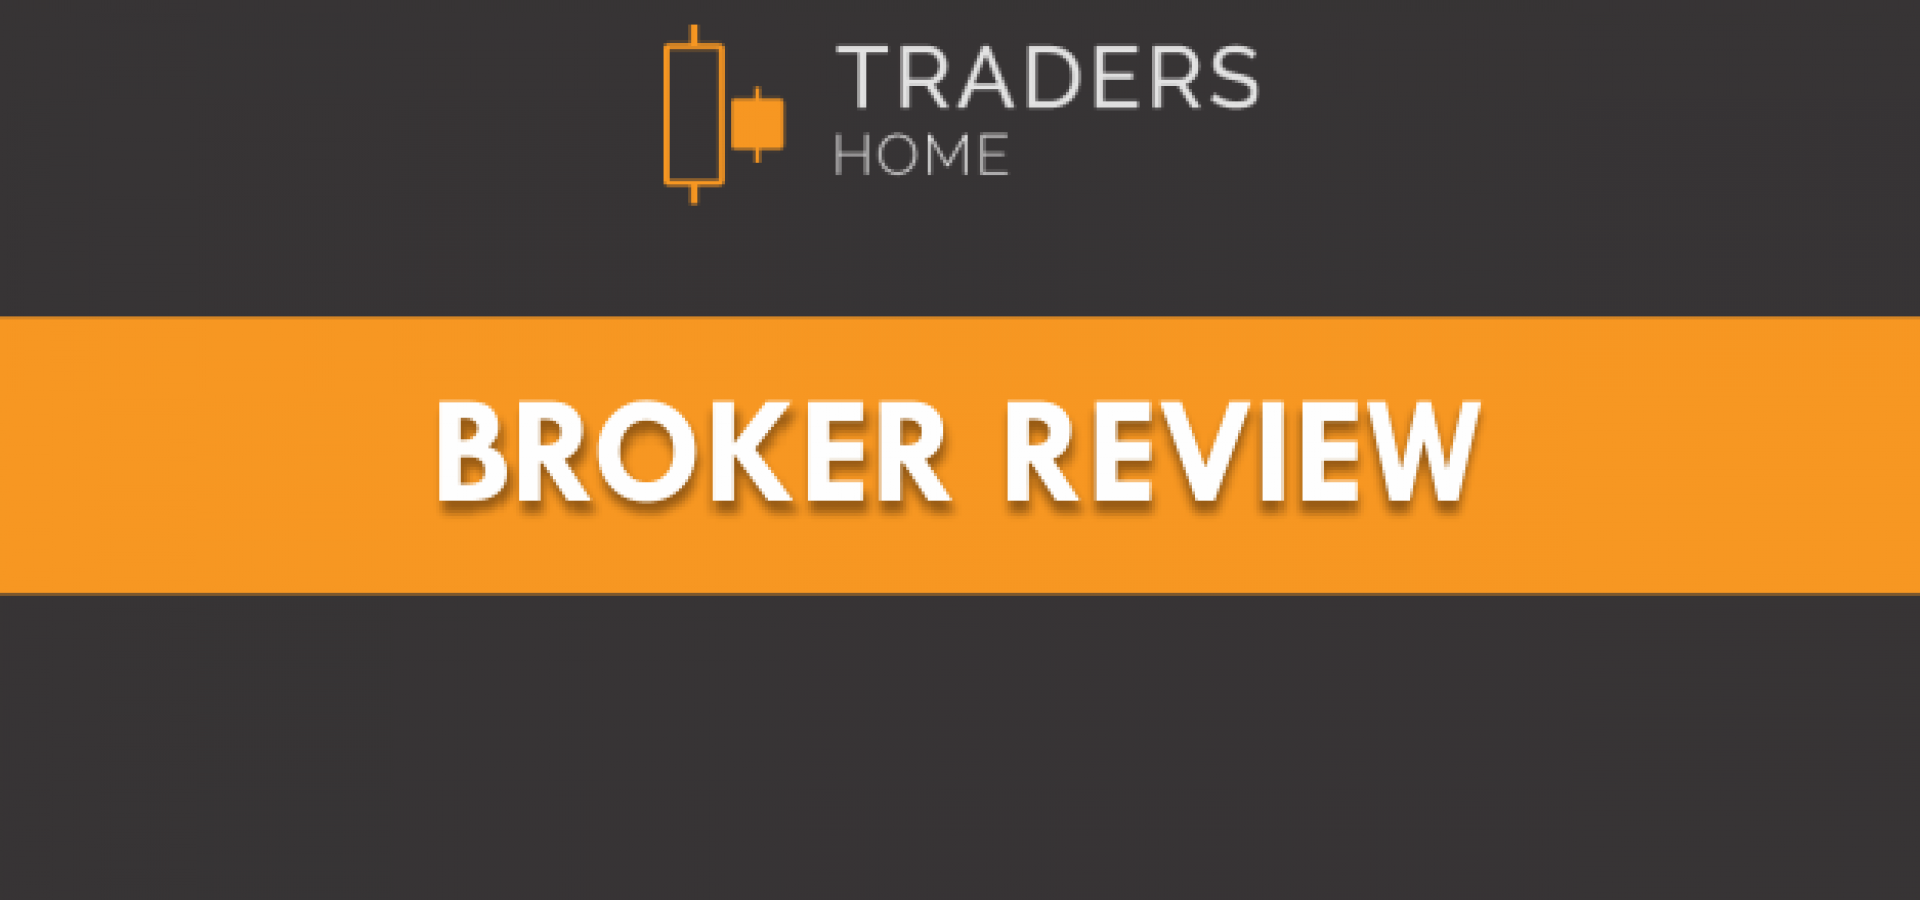 TradersHome Broker Review